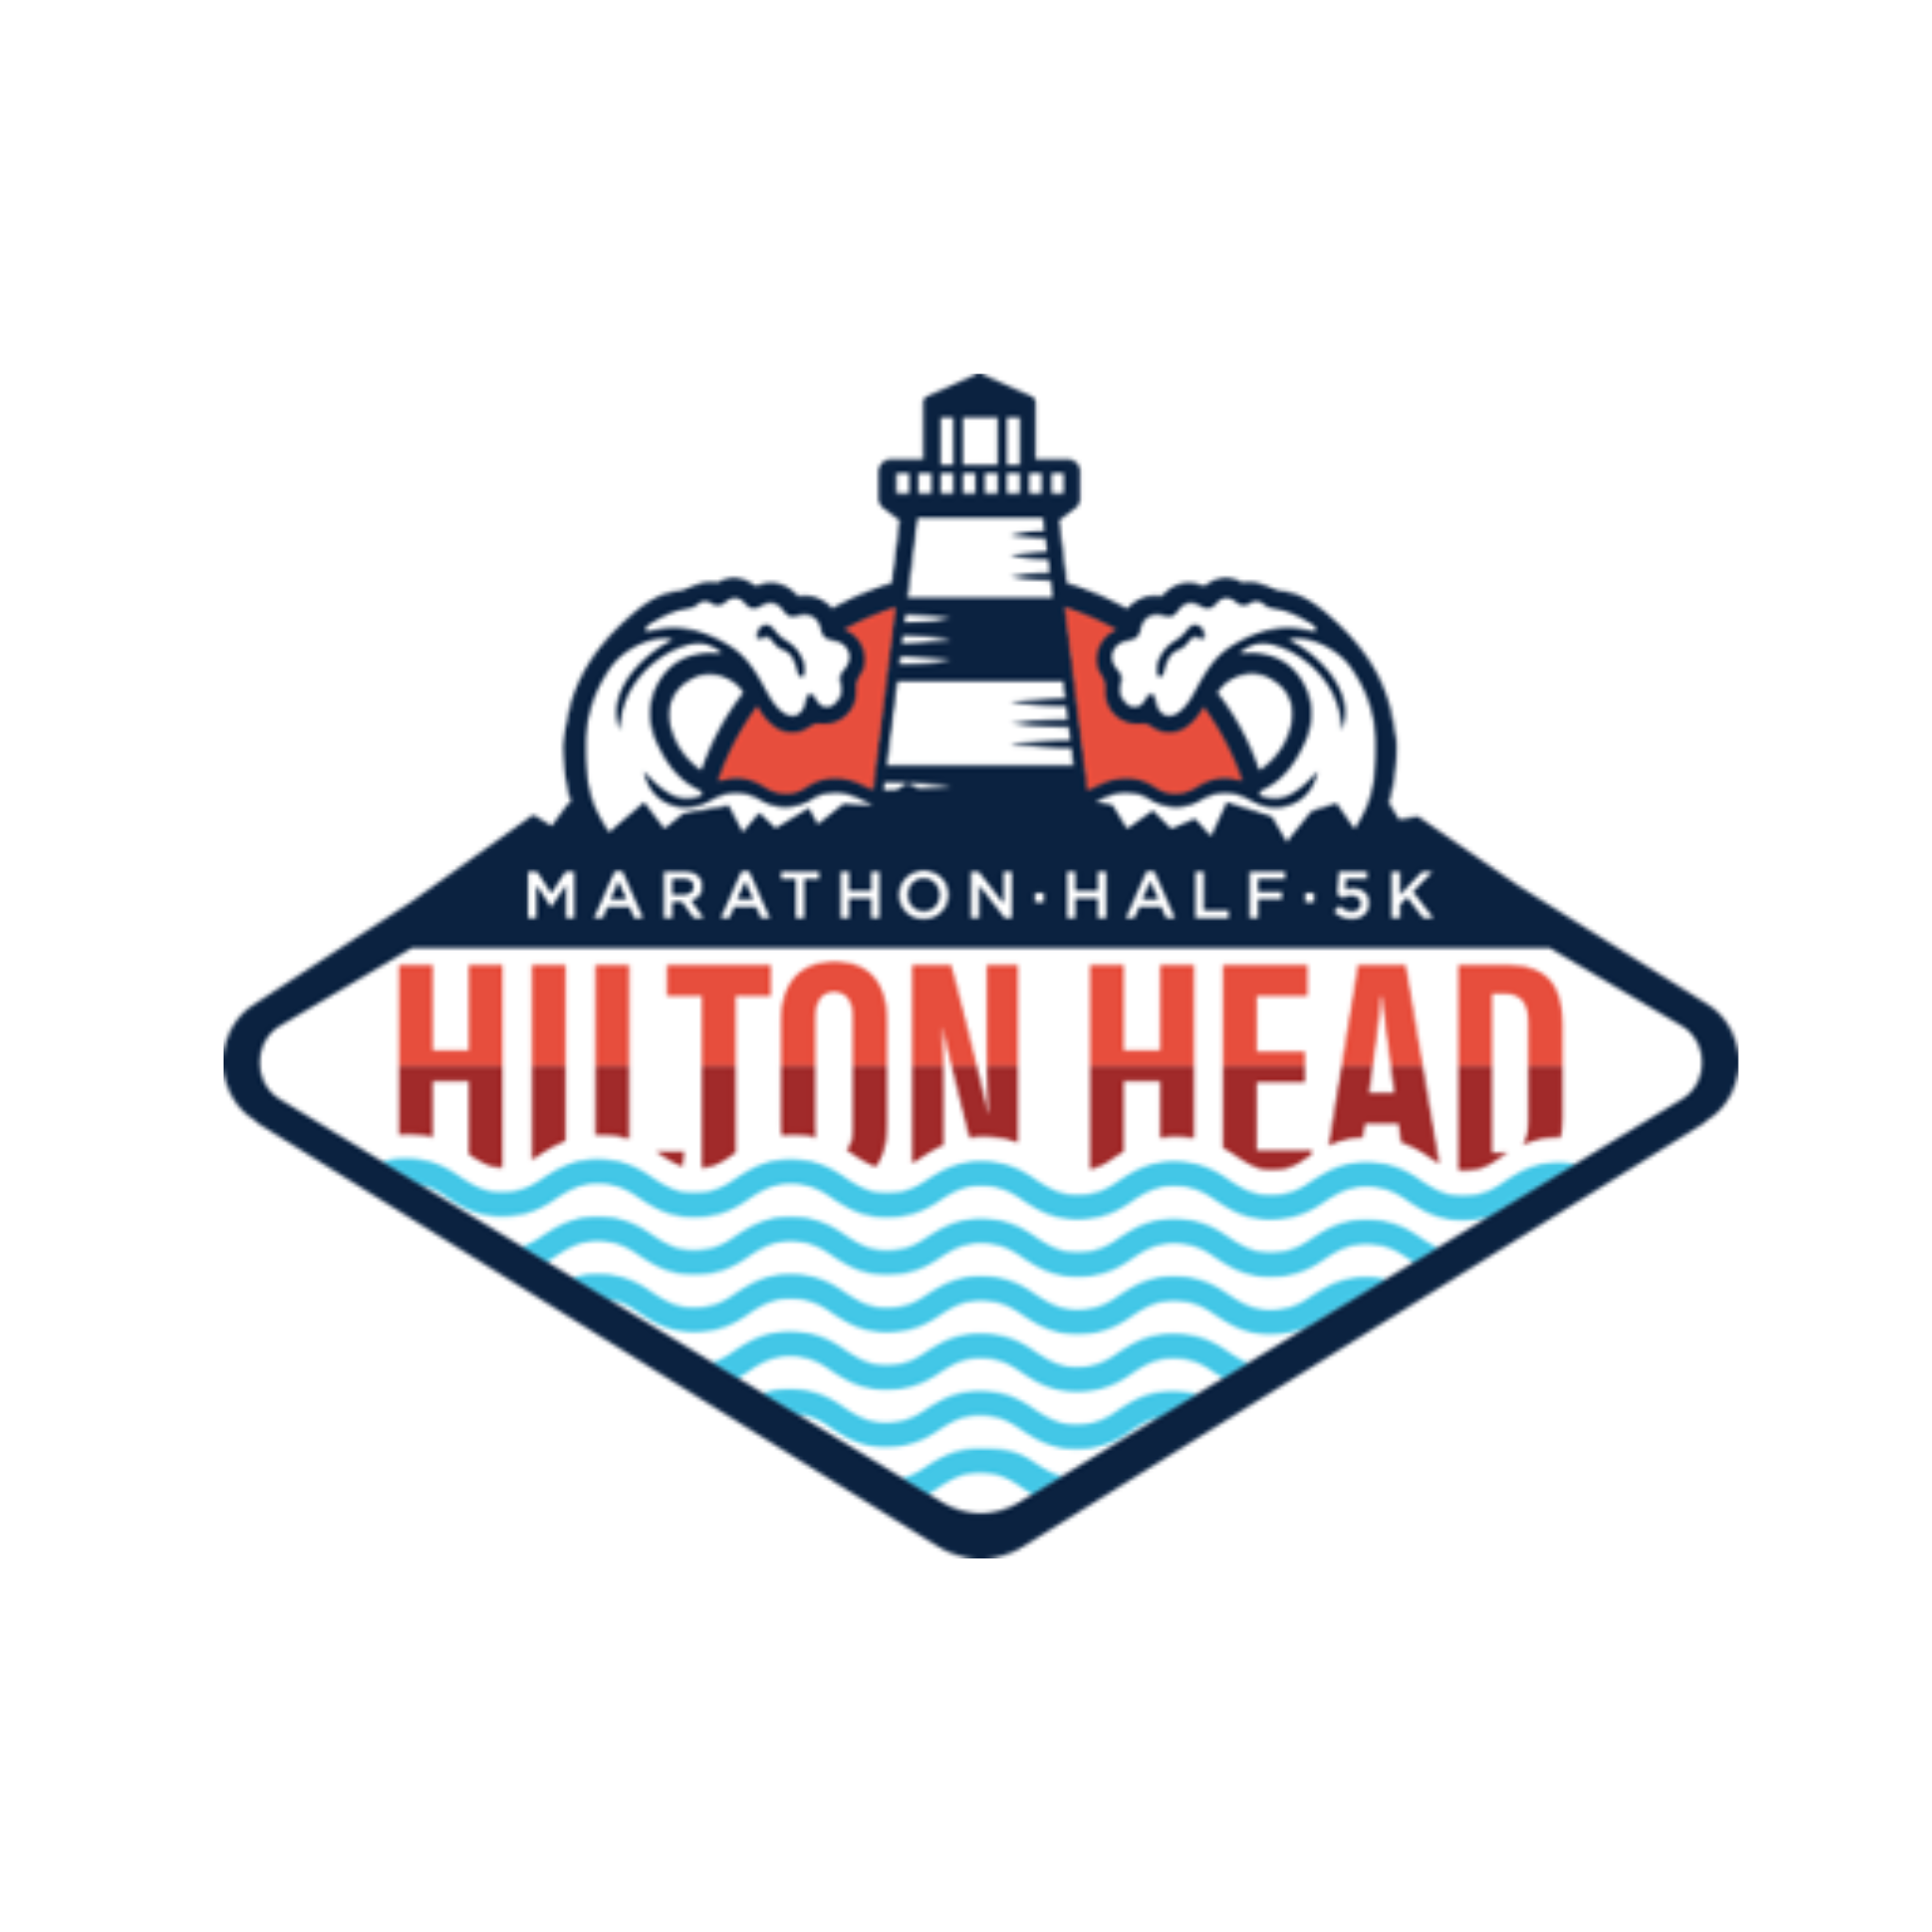 Hilton Head Decals